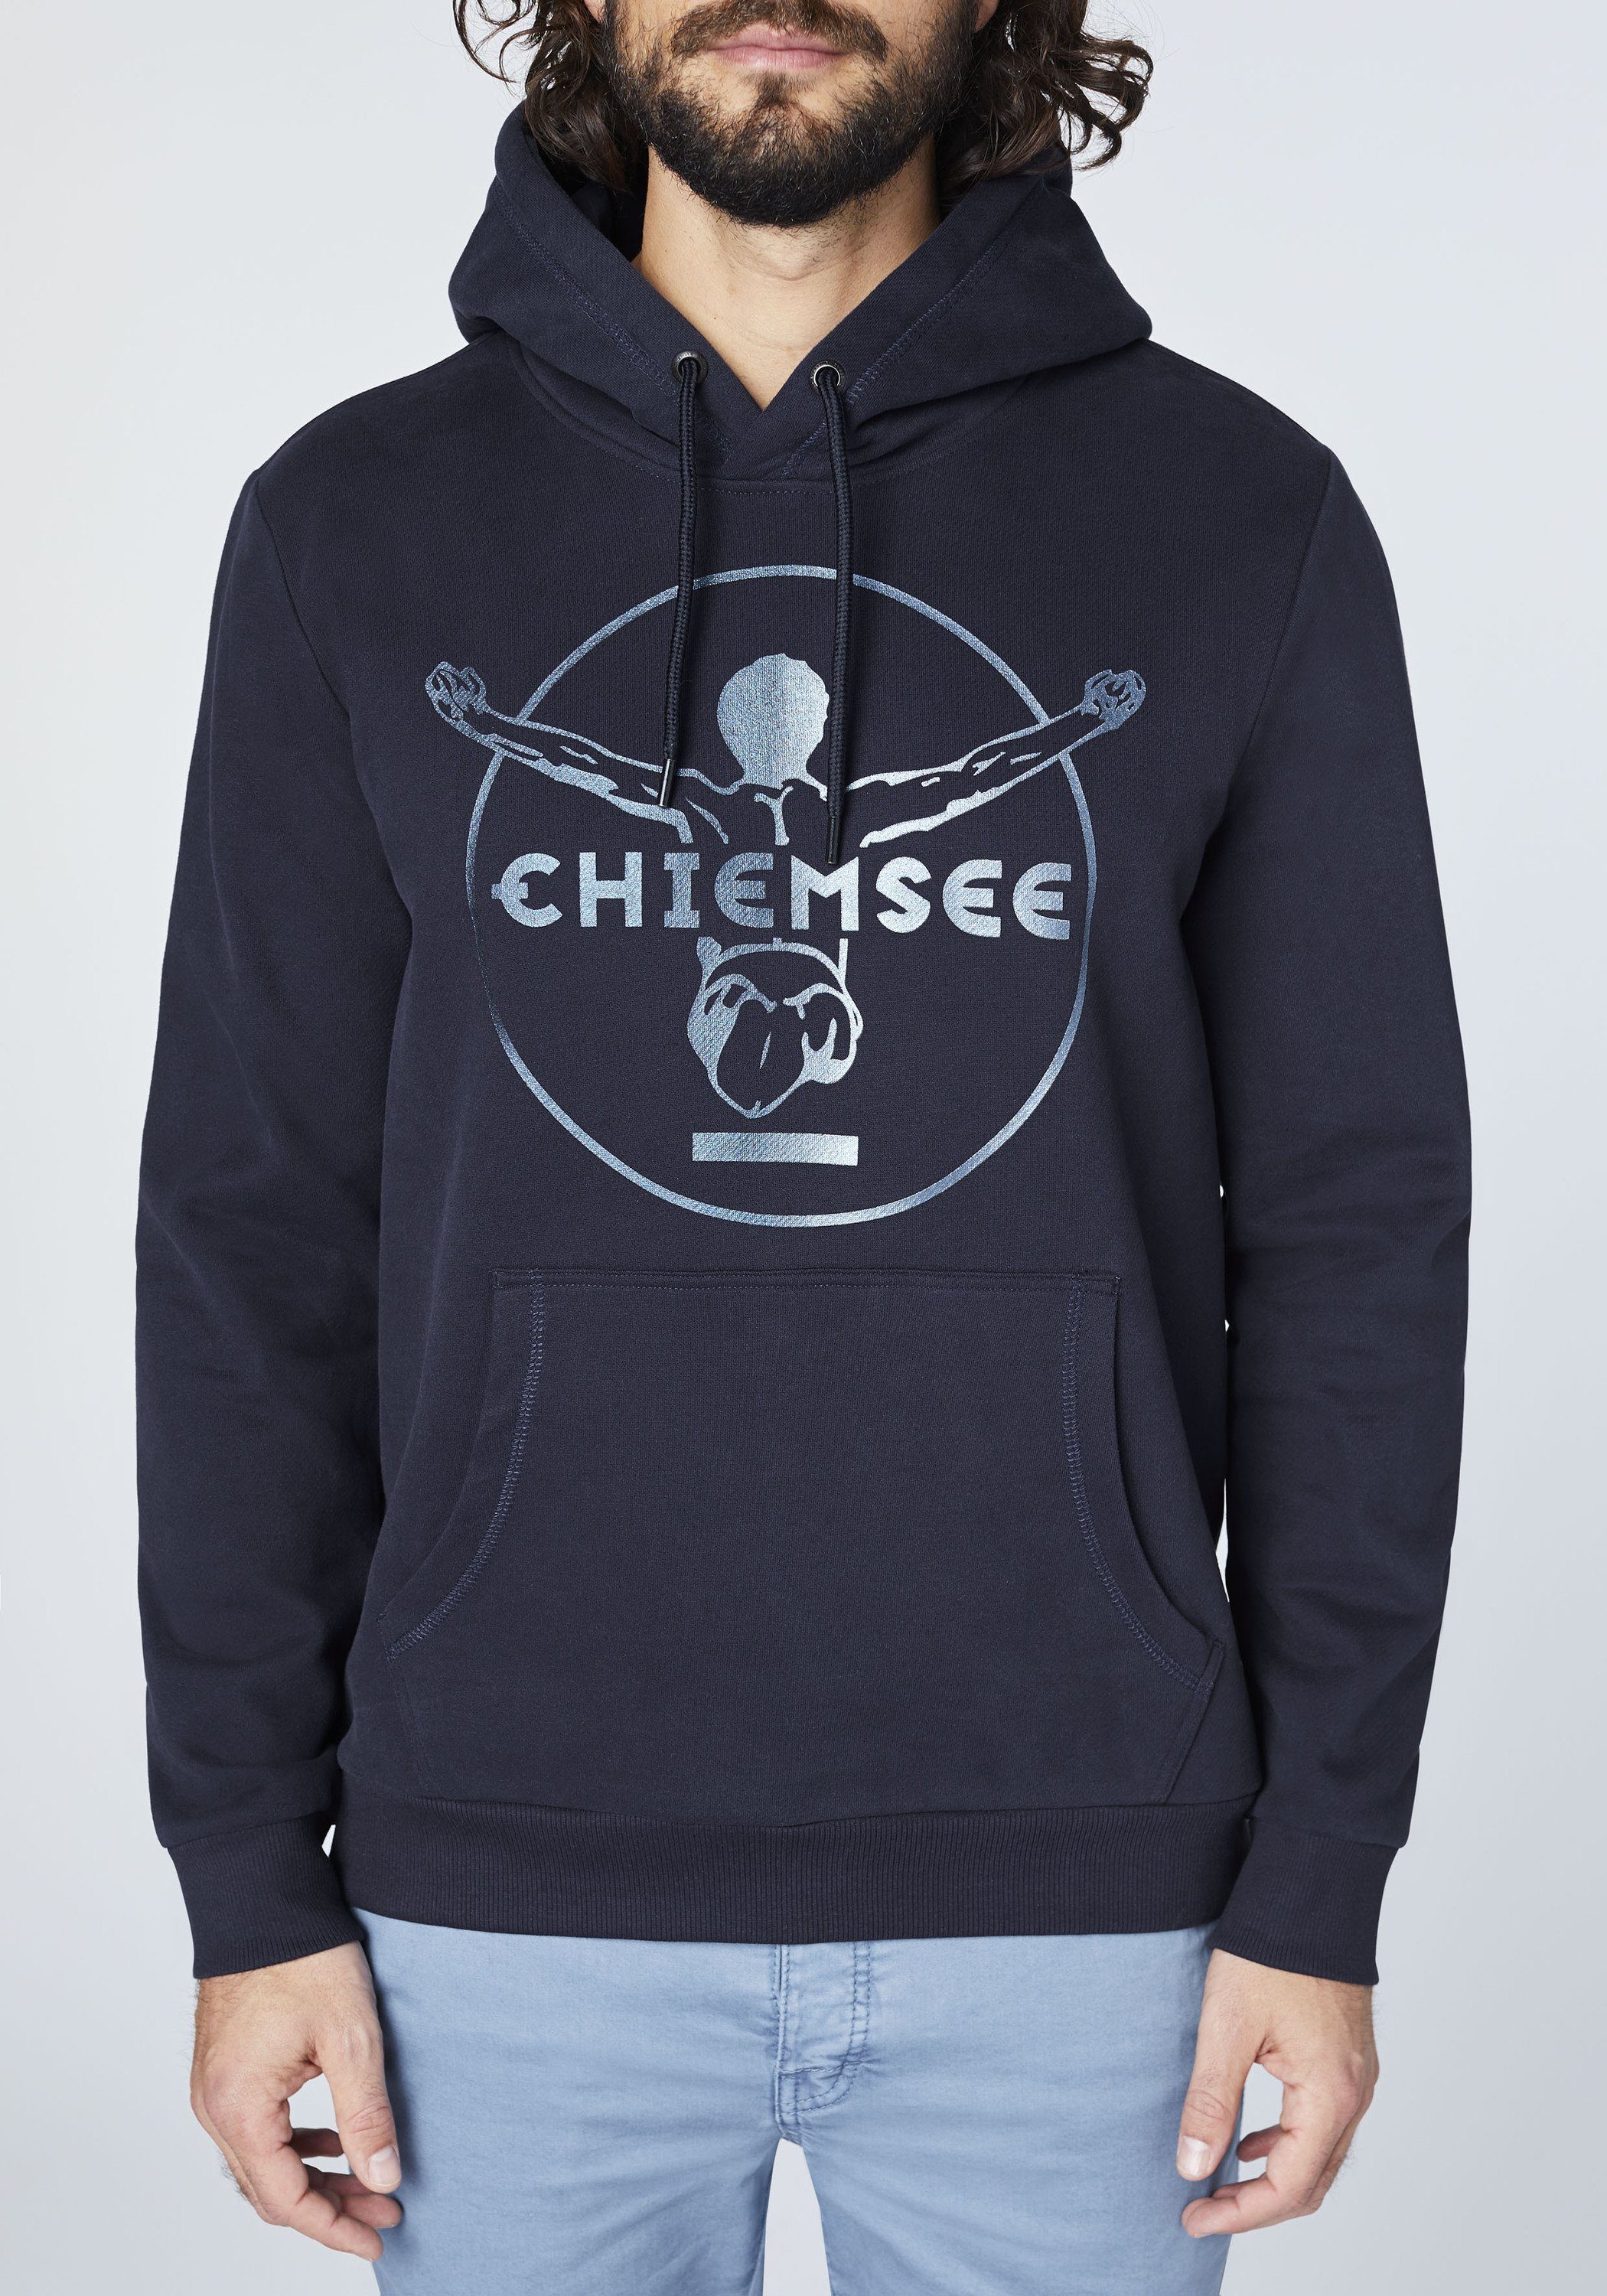 Hoodie Chiemsee Jumper-Motiv dunkel blau Kapuzensweatshirt mit 1